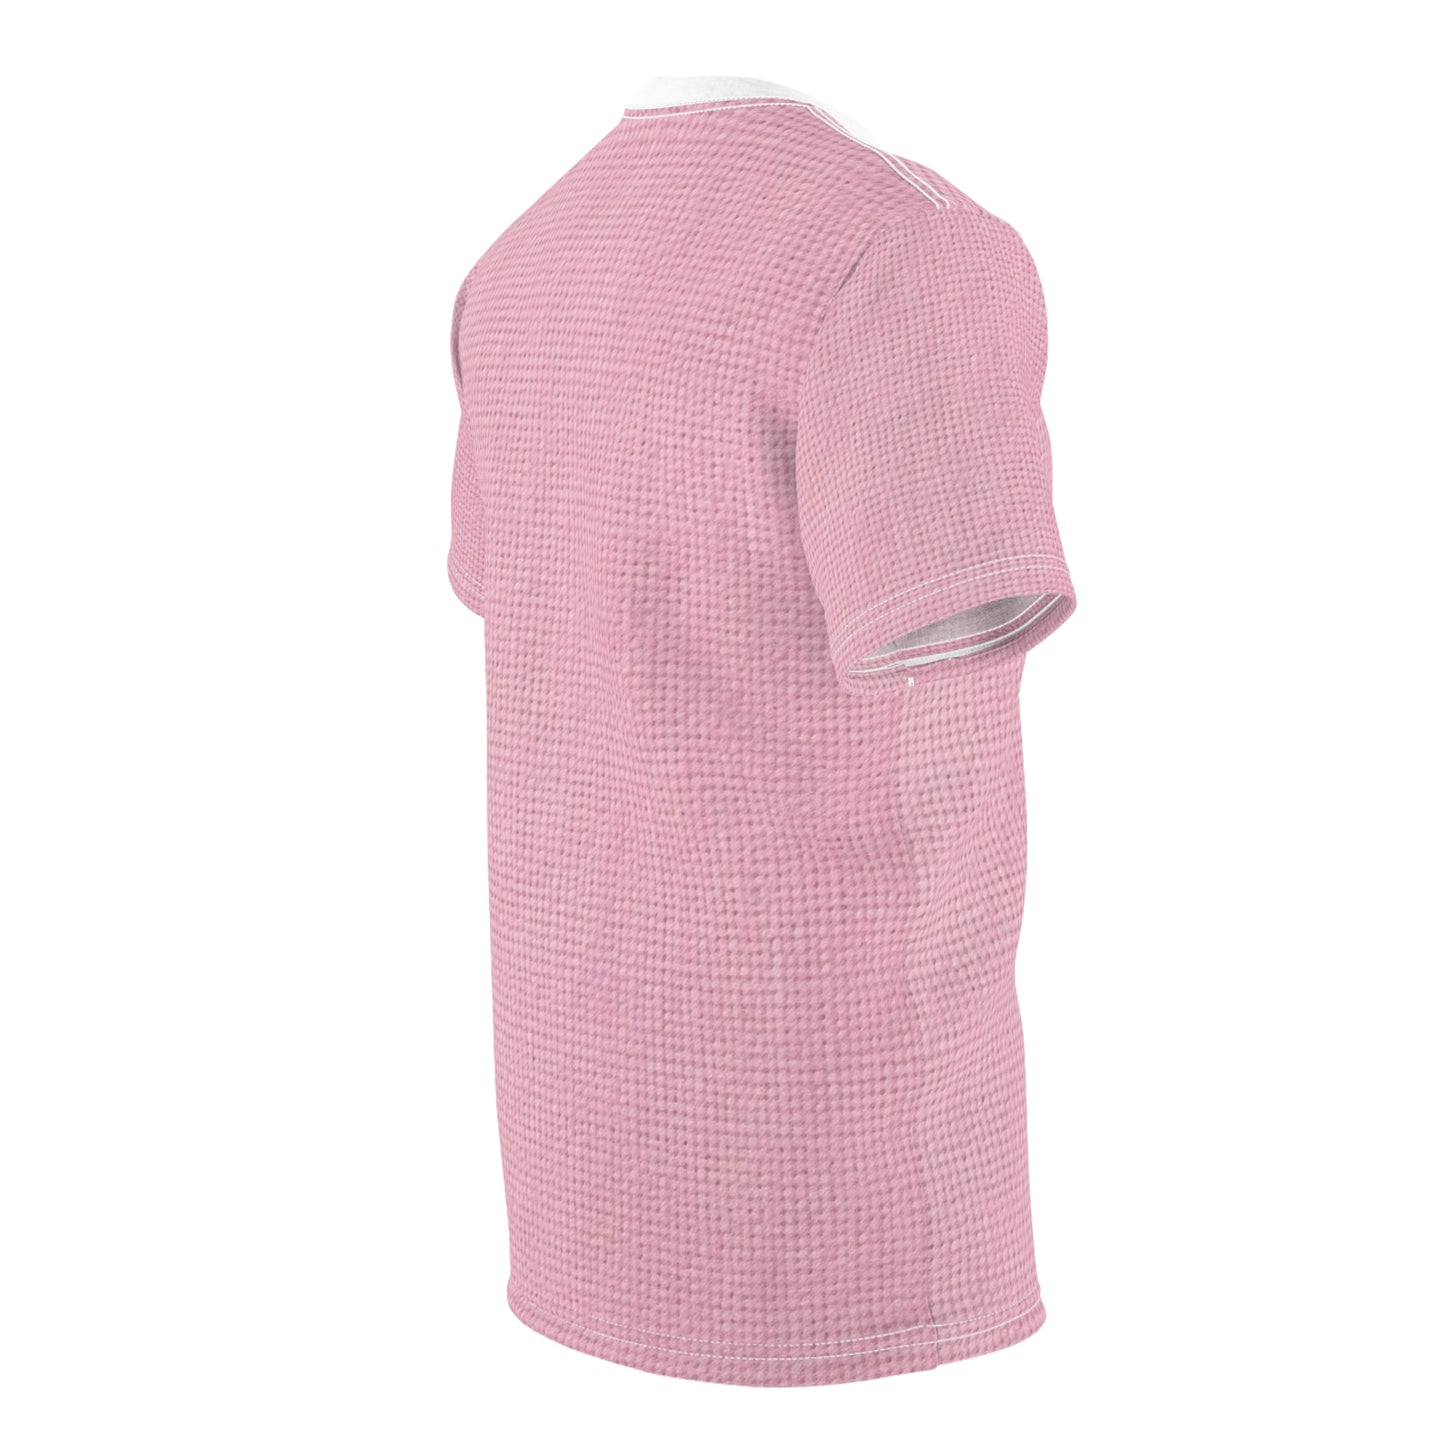 Blushing Garment Dye Pink: Denim-Inspired, Soft-Toned Fabric - Unisex Cut & Sew Tee (AOP)